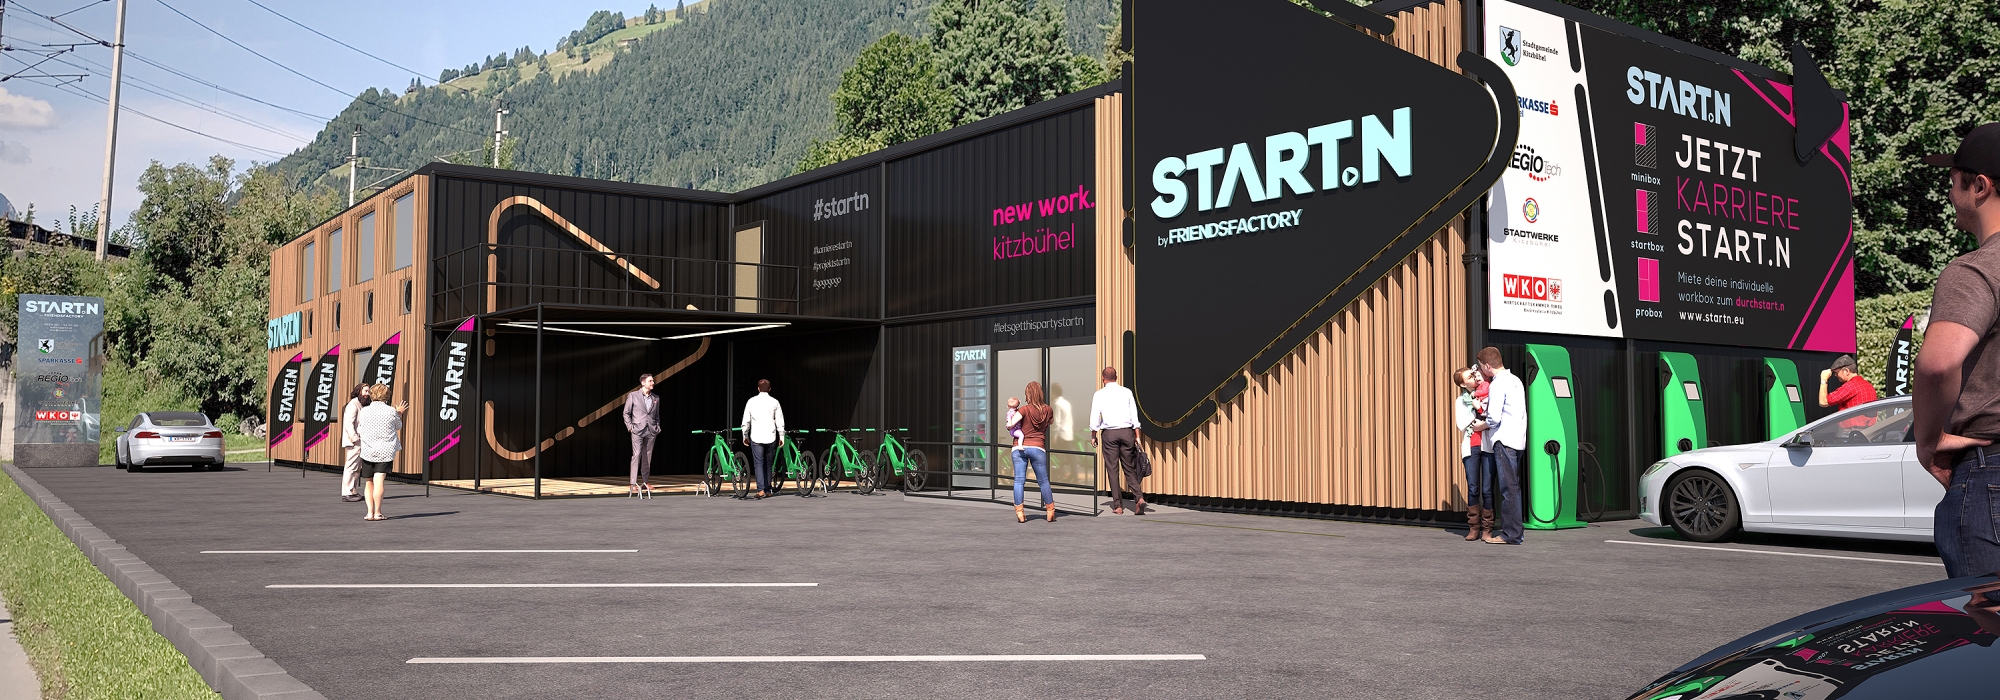 START.N Gründercenter Kitzbühel